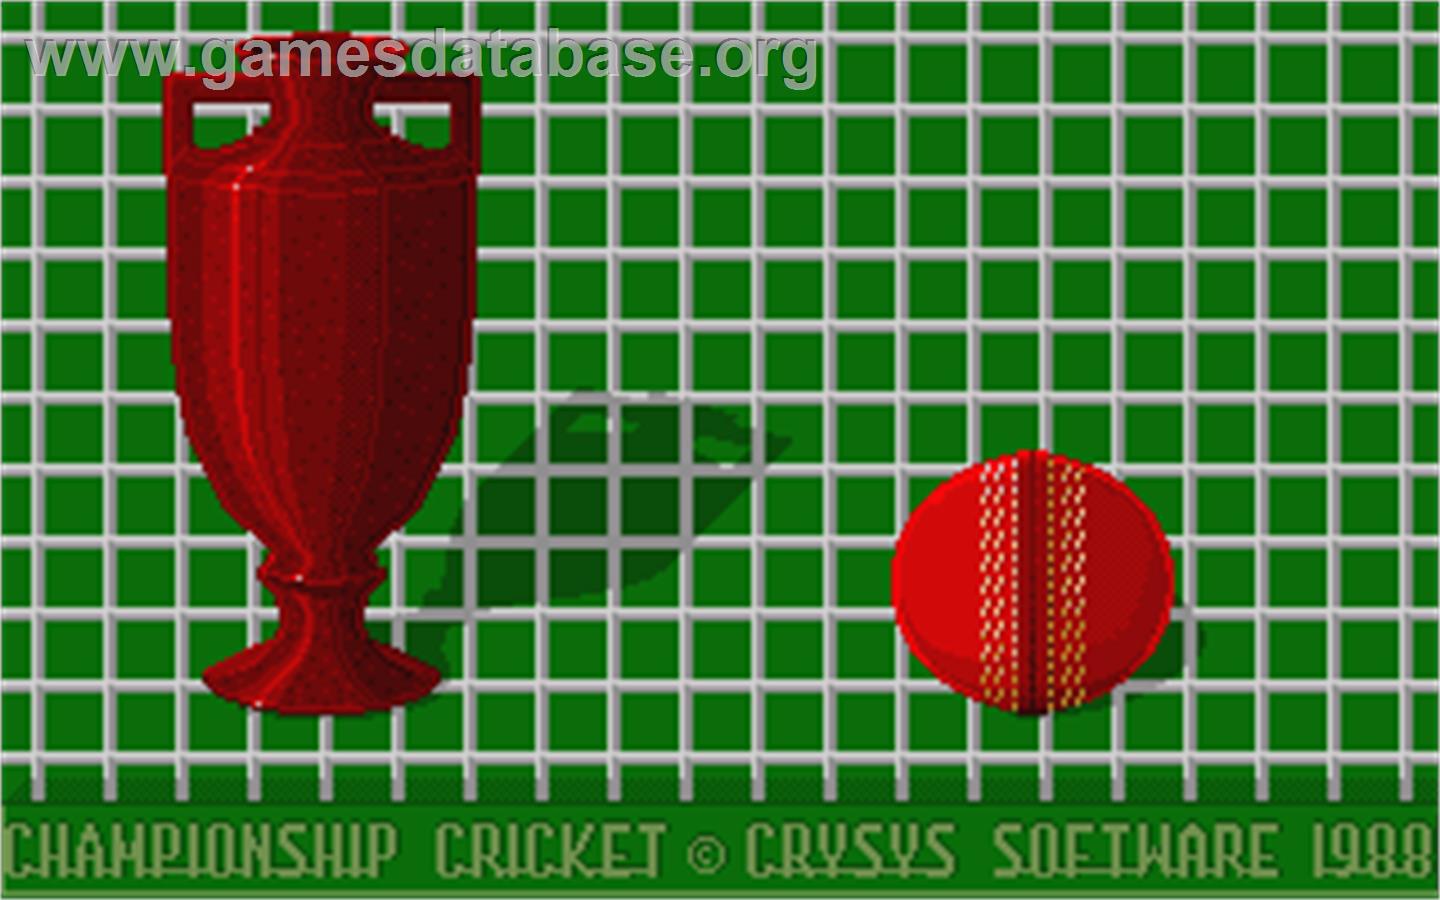 Allan Border's Cricket - Atari ST - Artwork - Title Screen